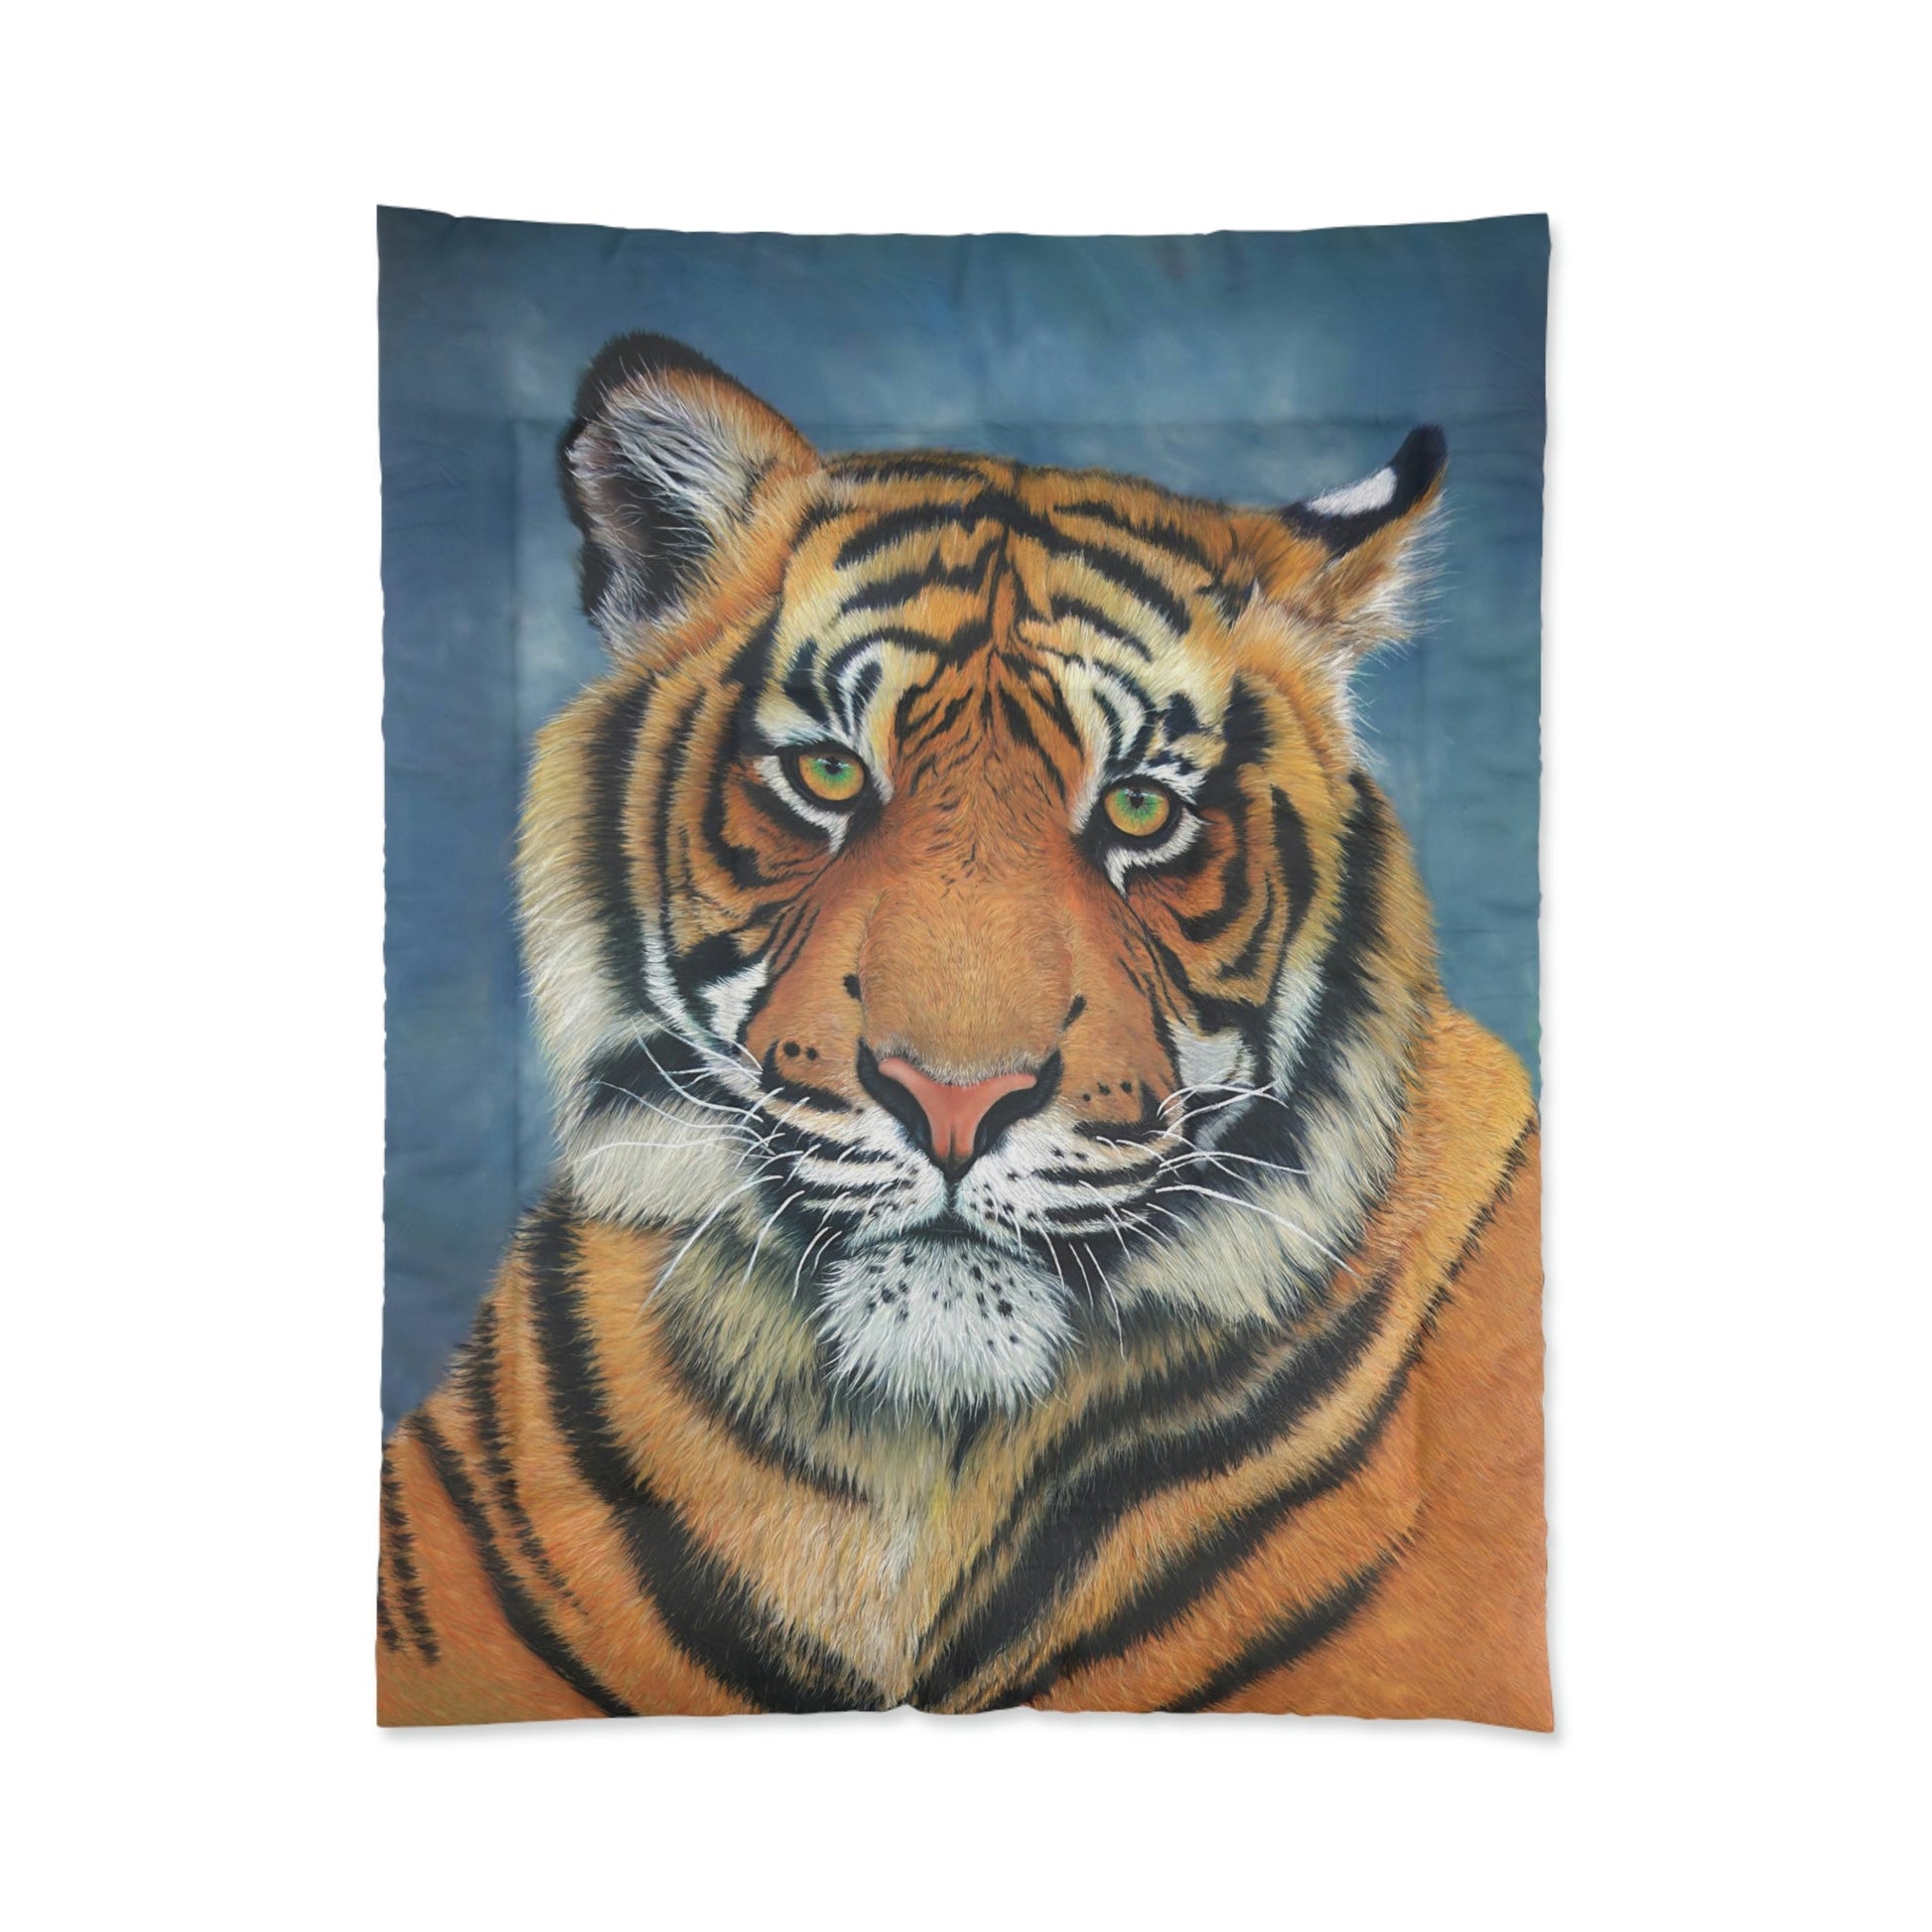 Comforter - "TIGER"